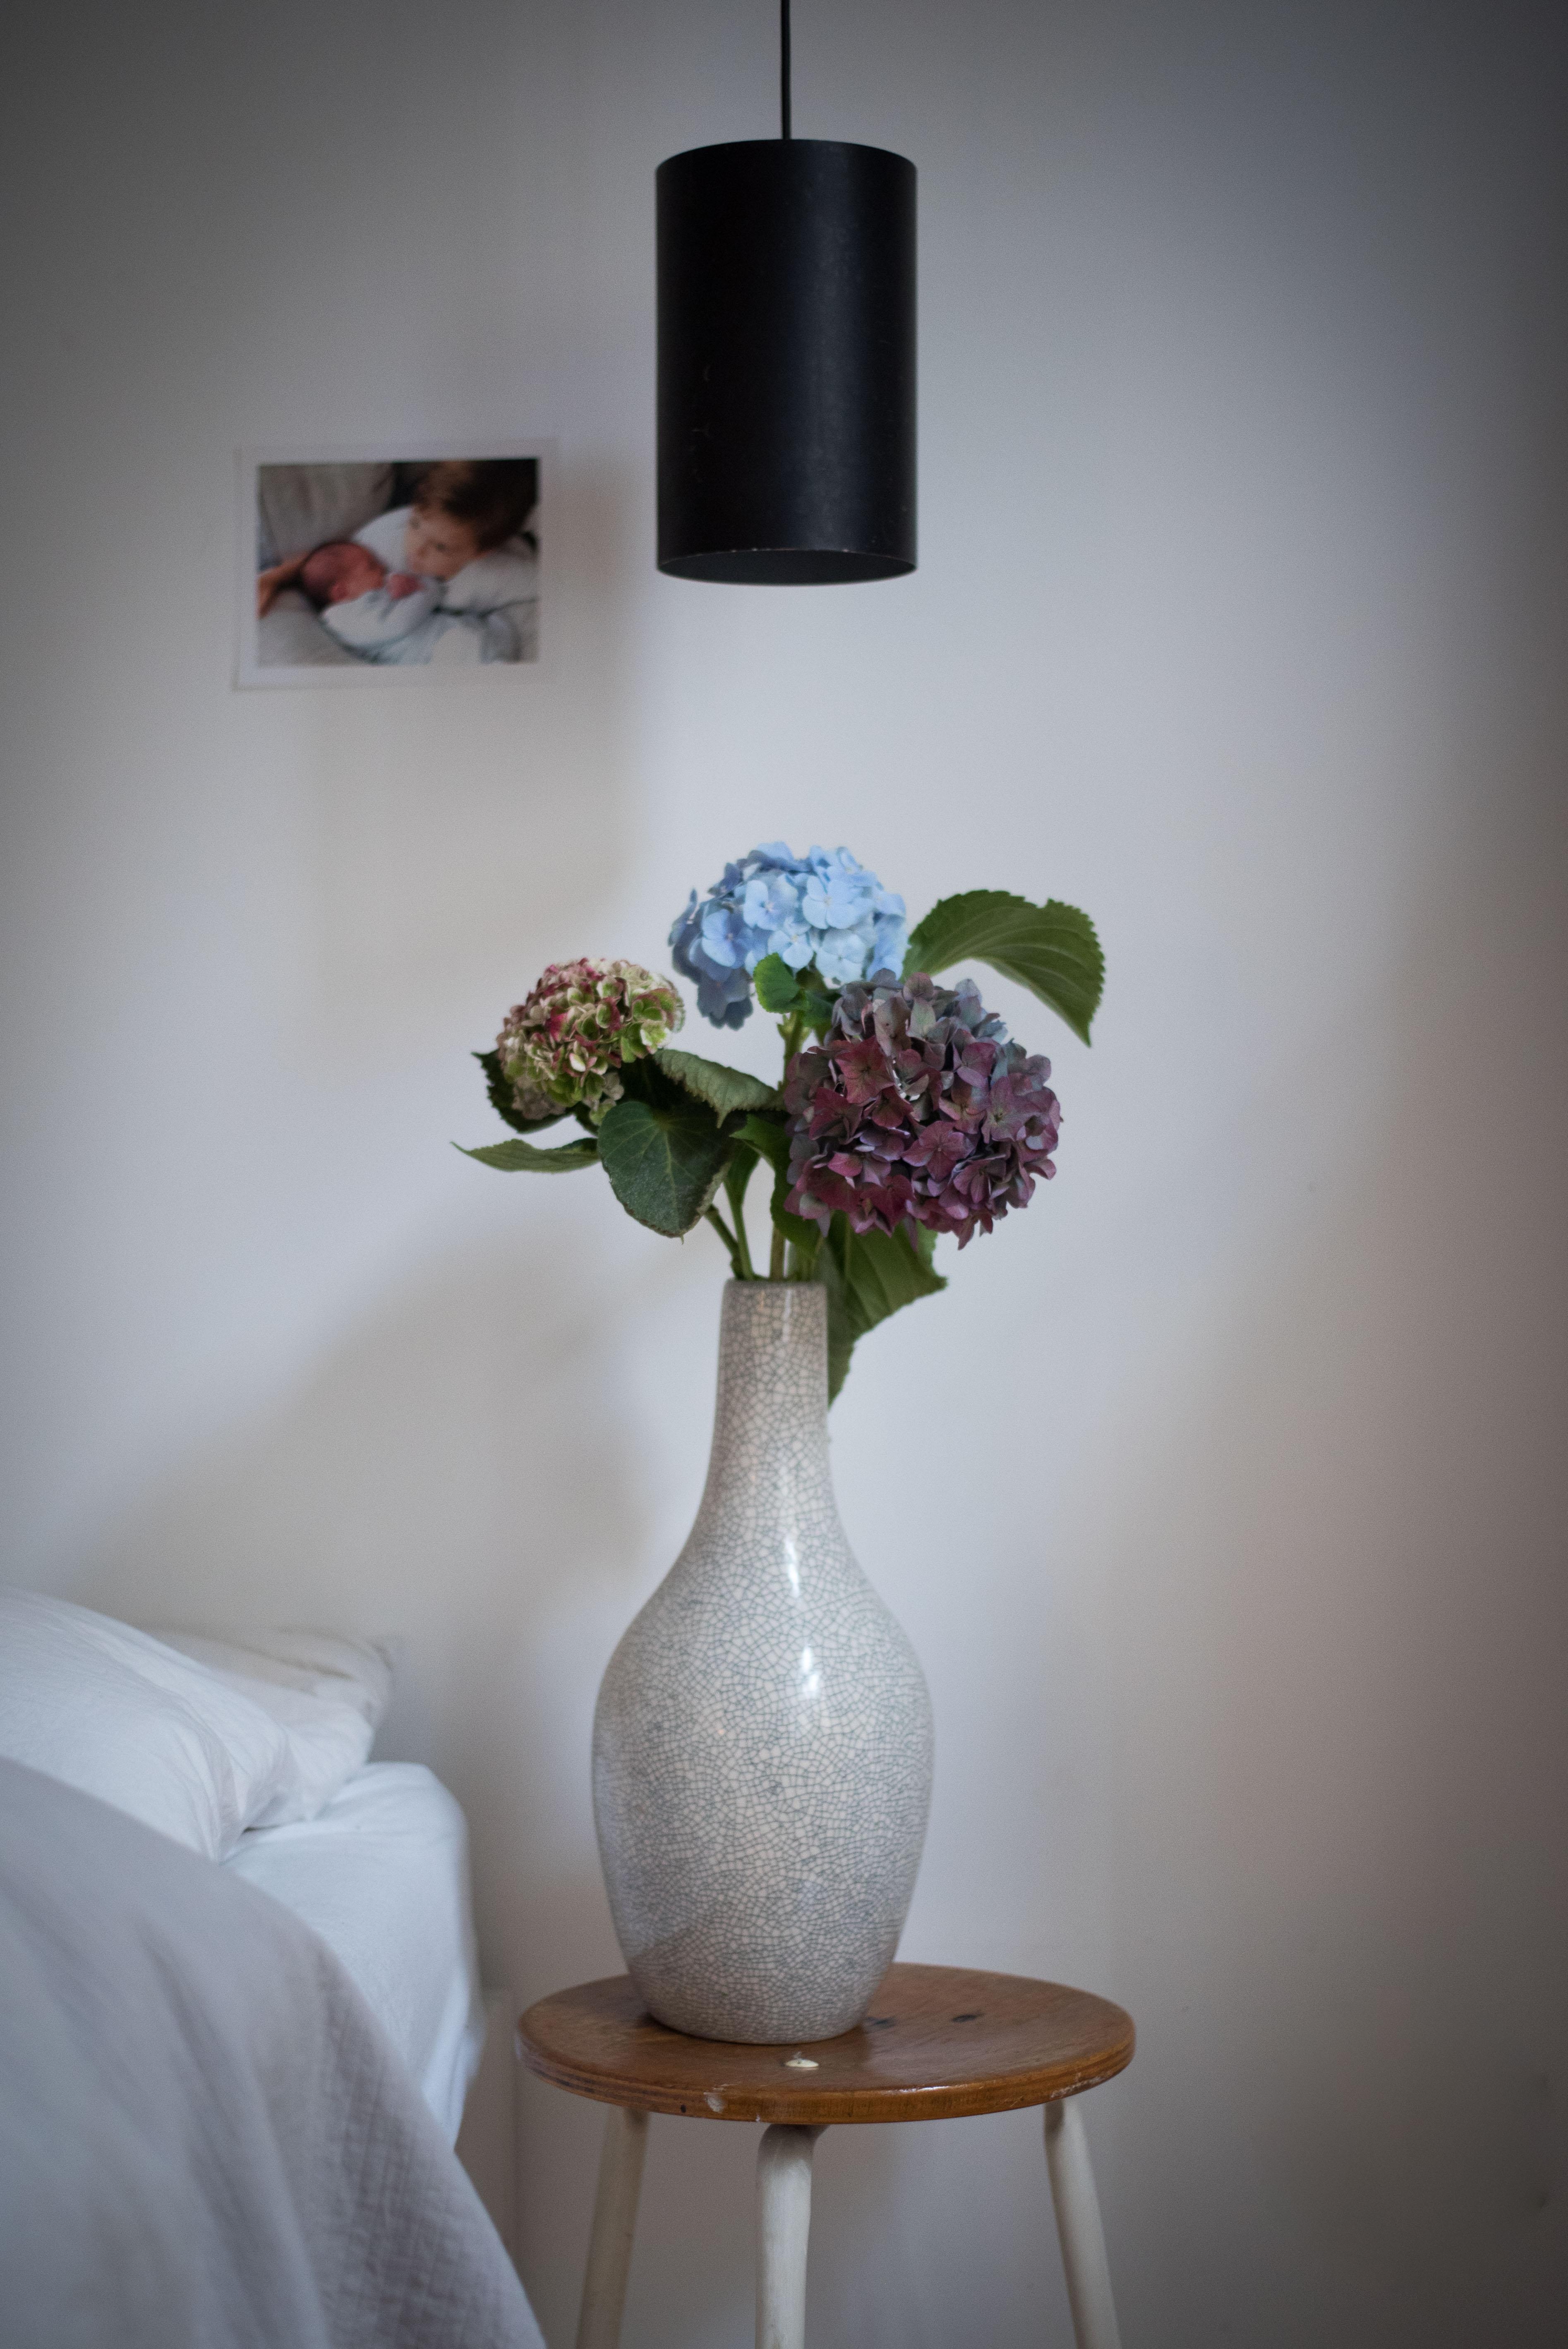 Freshflowerfriday! Hortensienliebe!!!
#bedroom #freshflowers #interior